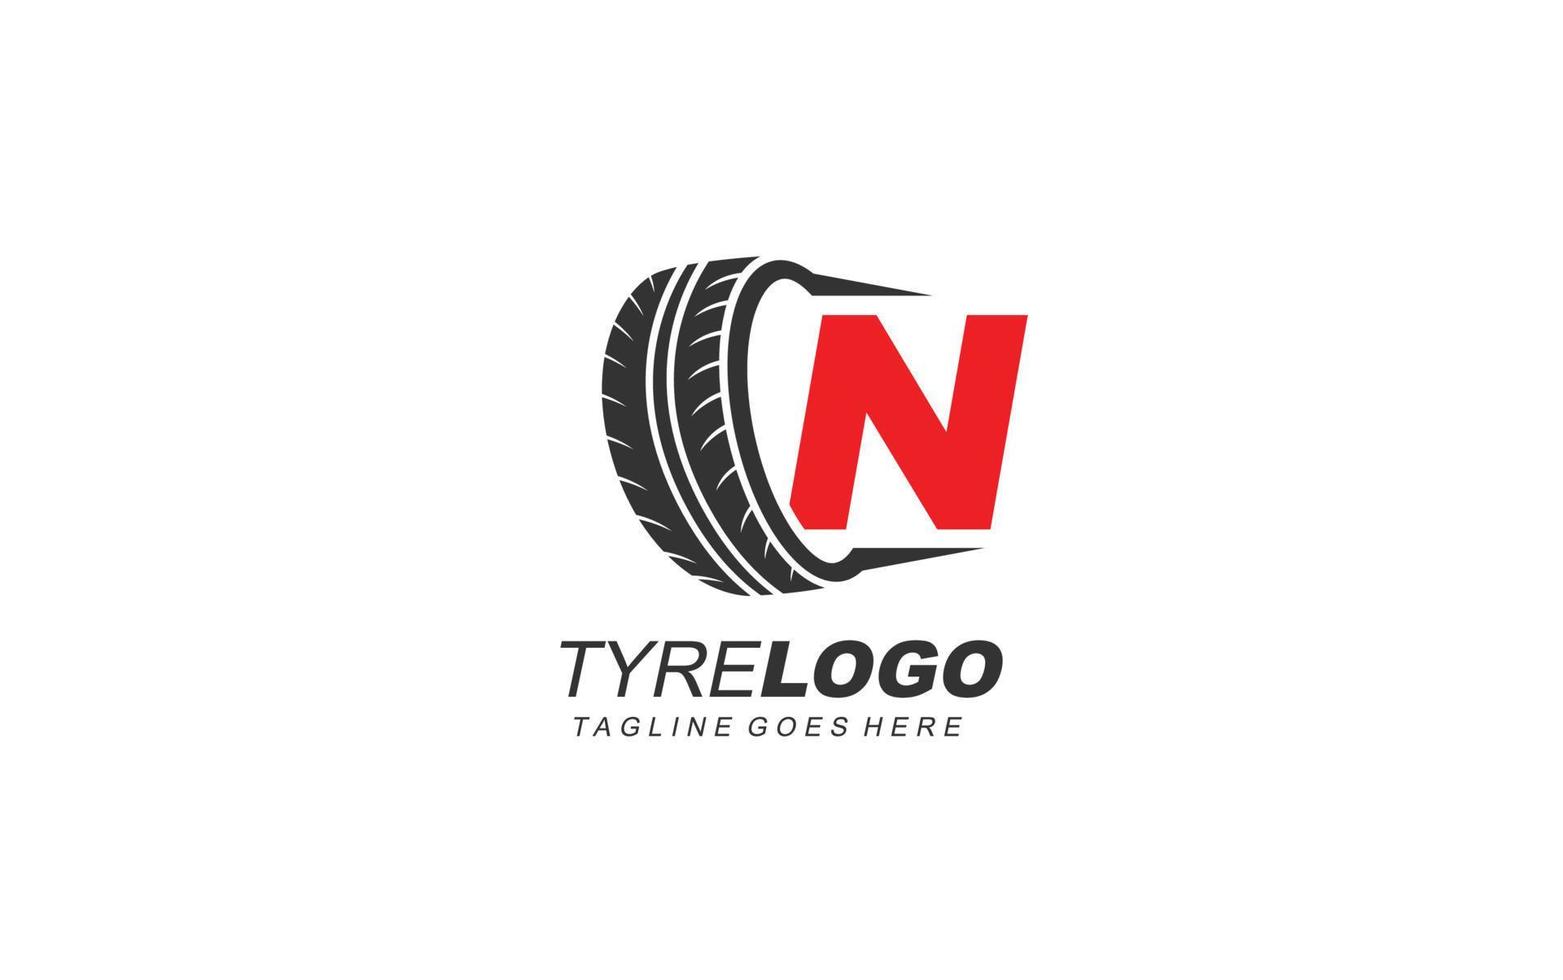 N logo tyre for branding company. wheel template vector illustration for your brand.